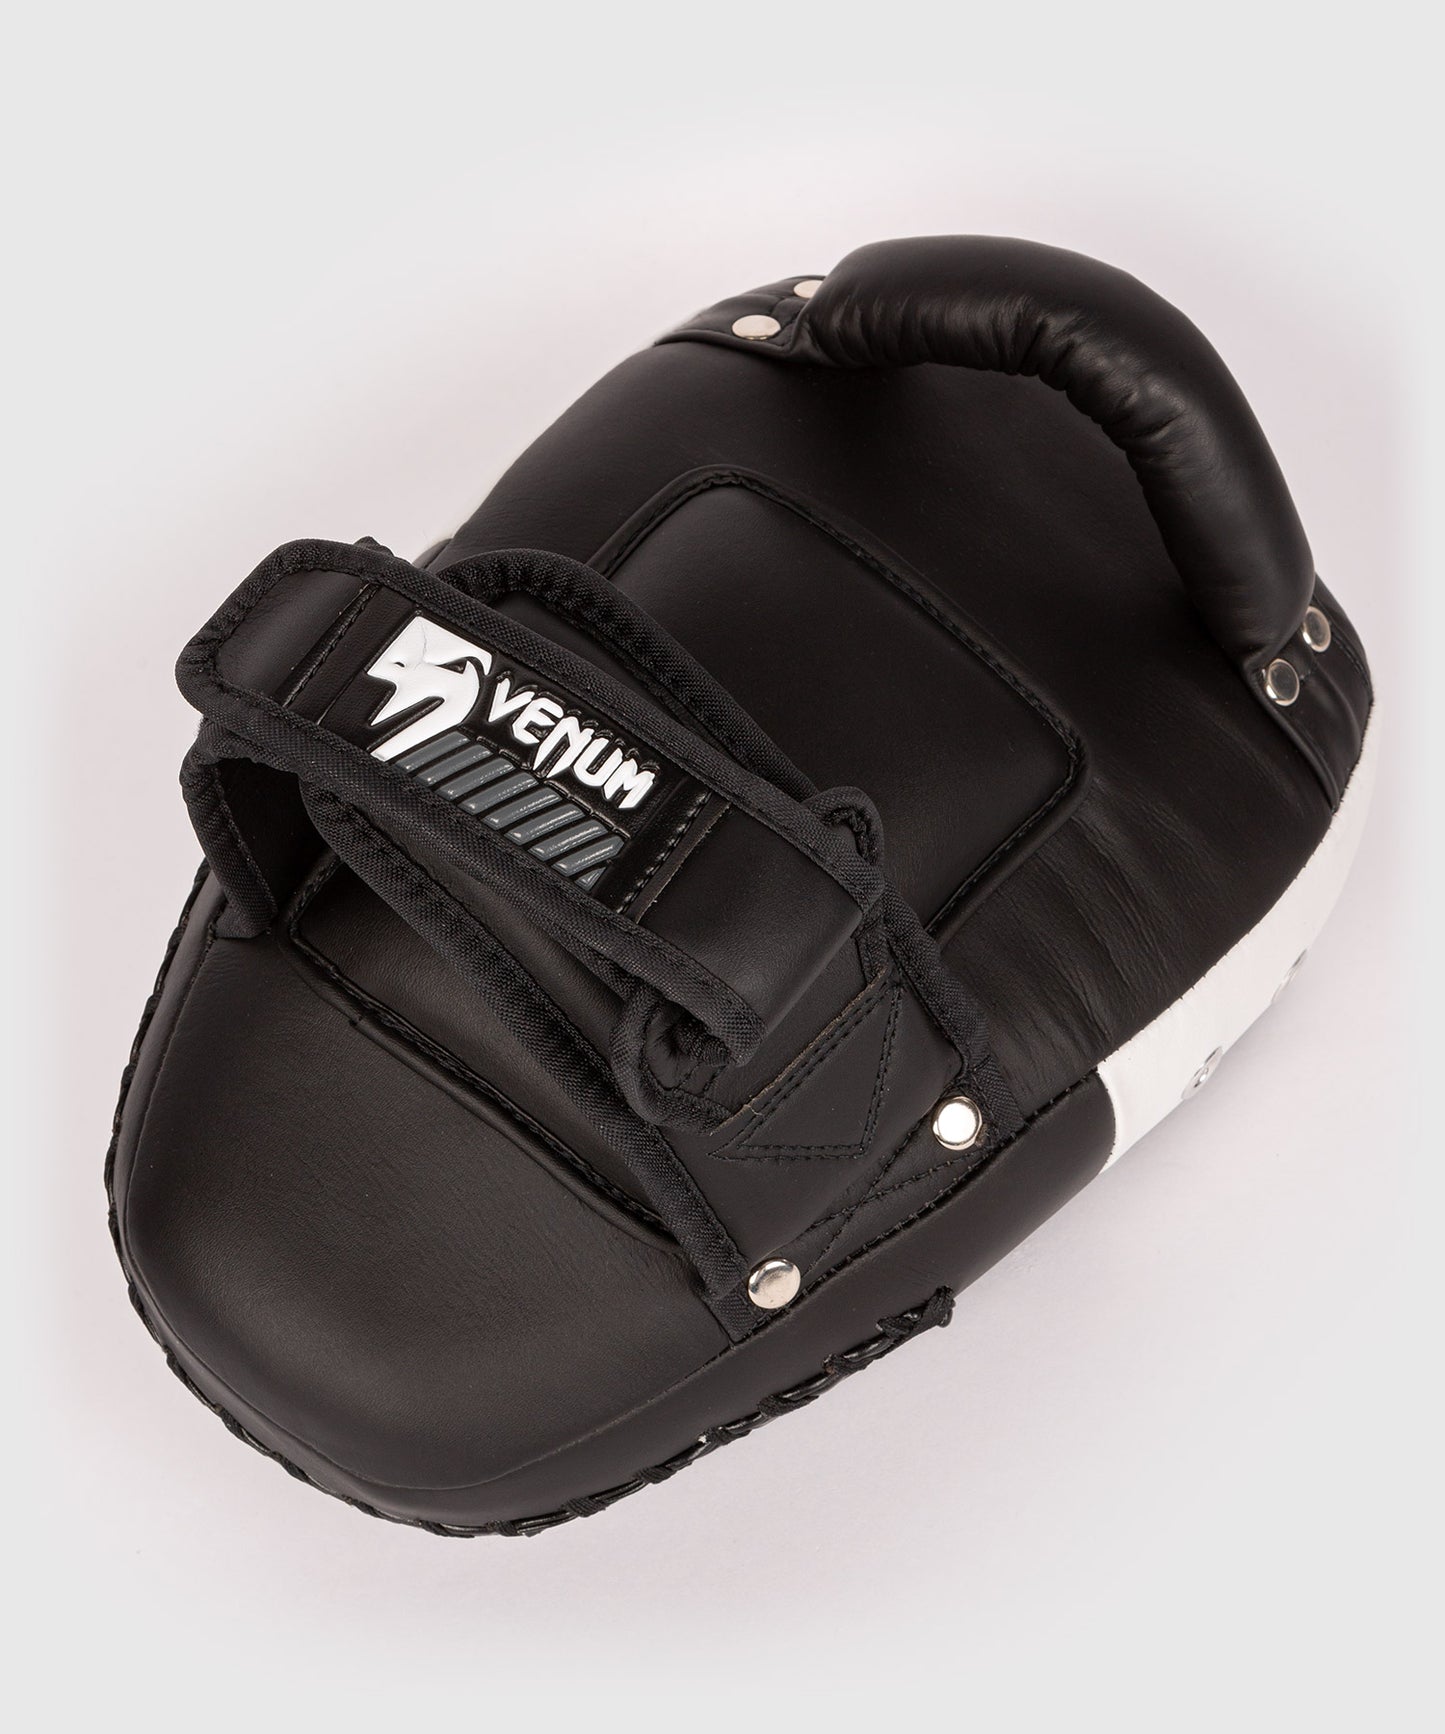 Venum Small Kick Boxing Pad 2.0 Micro Fiber Quality - черный/белый